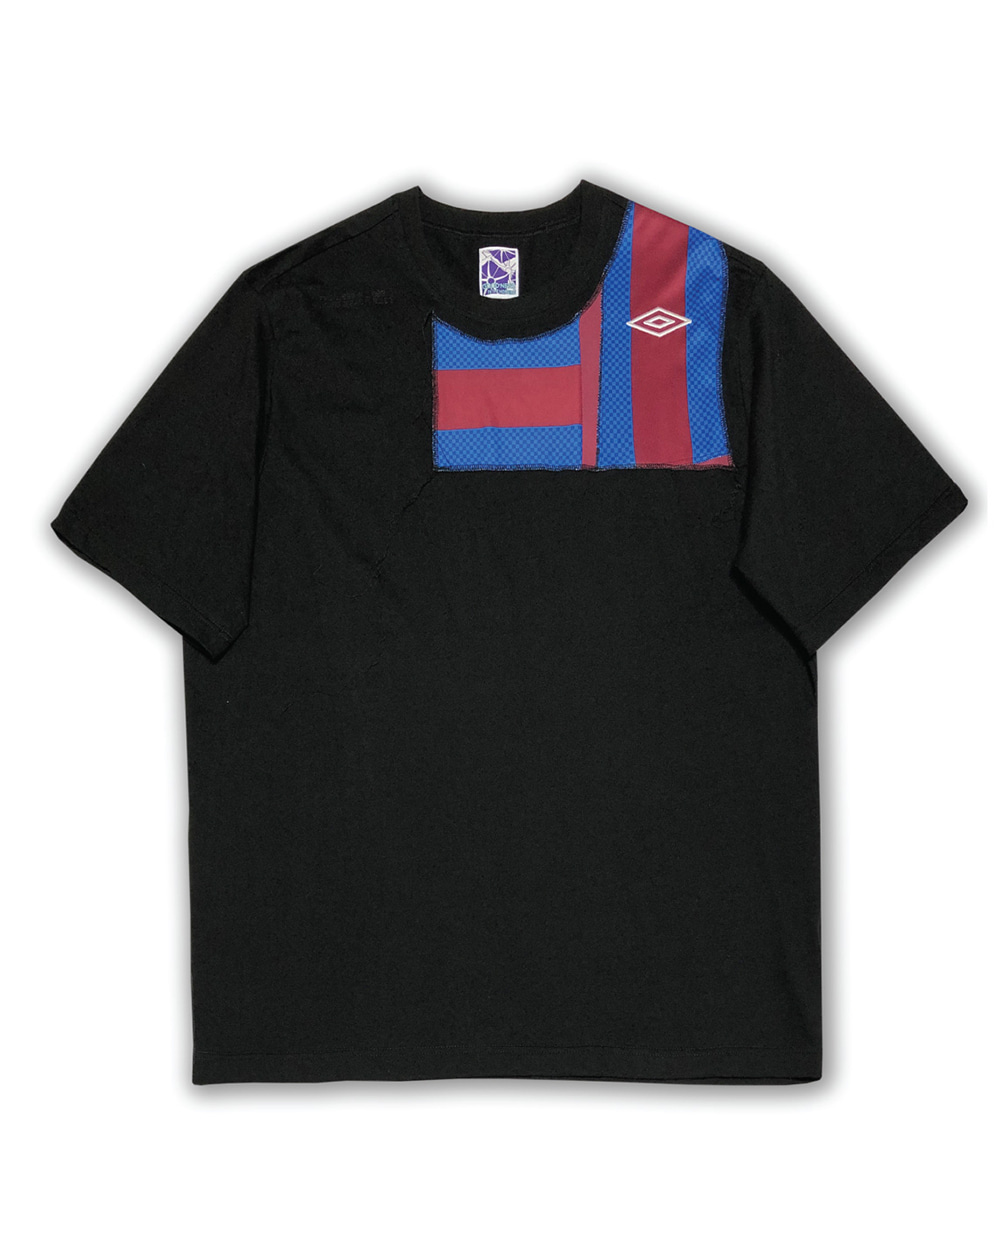 GOOD NEWS Soccer jersey patch T-shirts (Black) ver.3